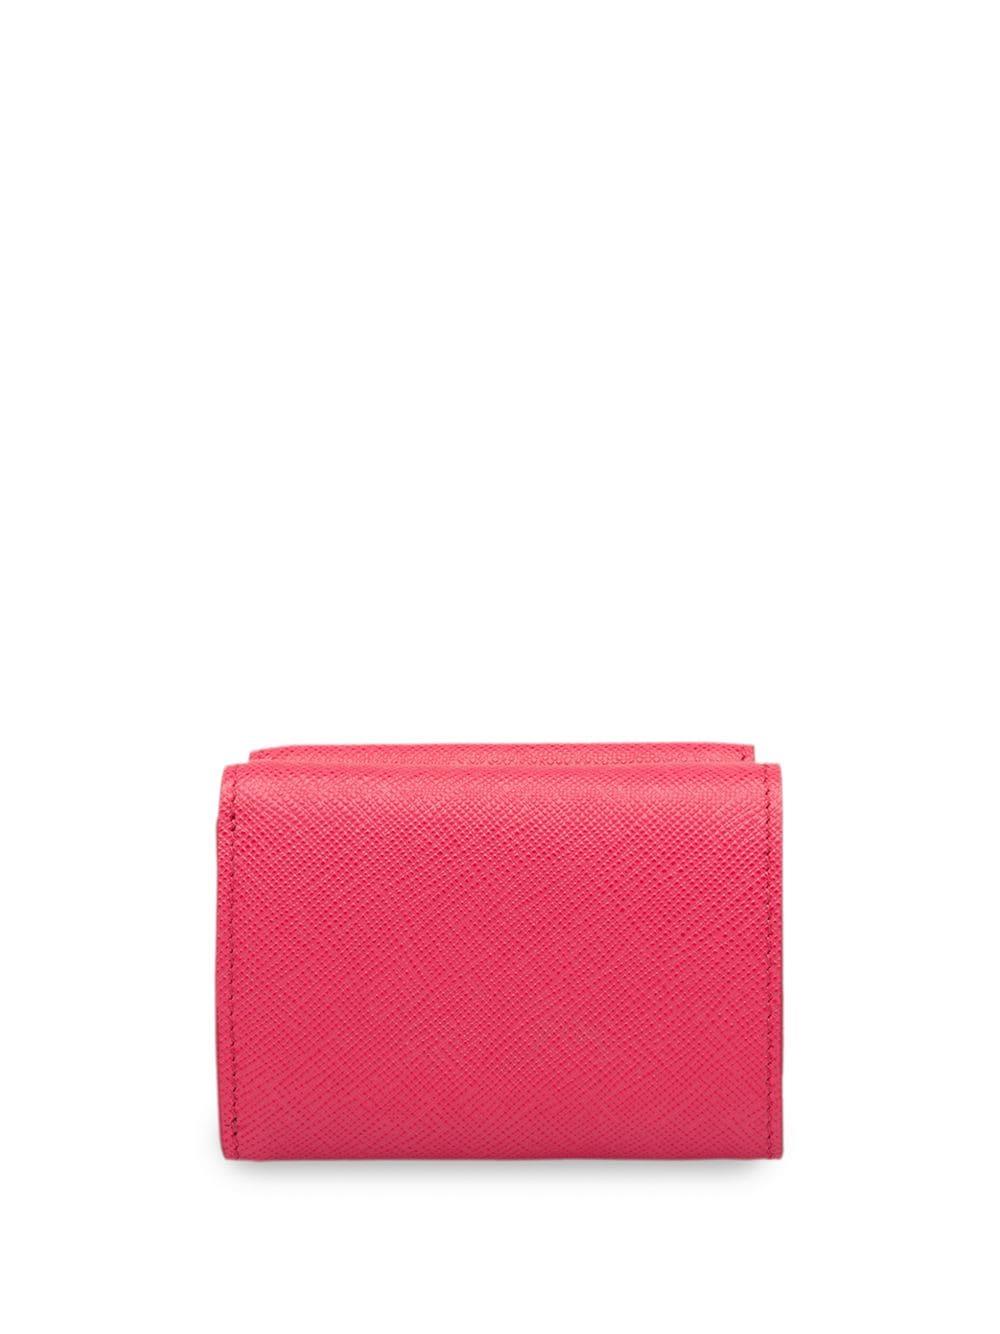 Prada Saffiano leather wallet - Pink